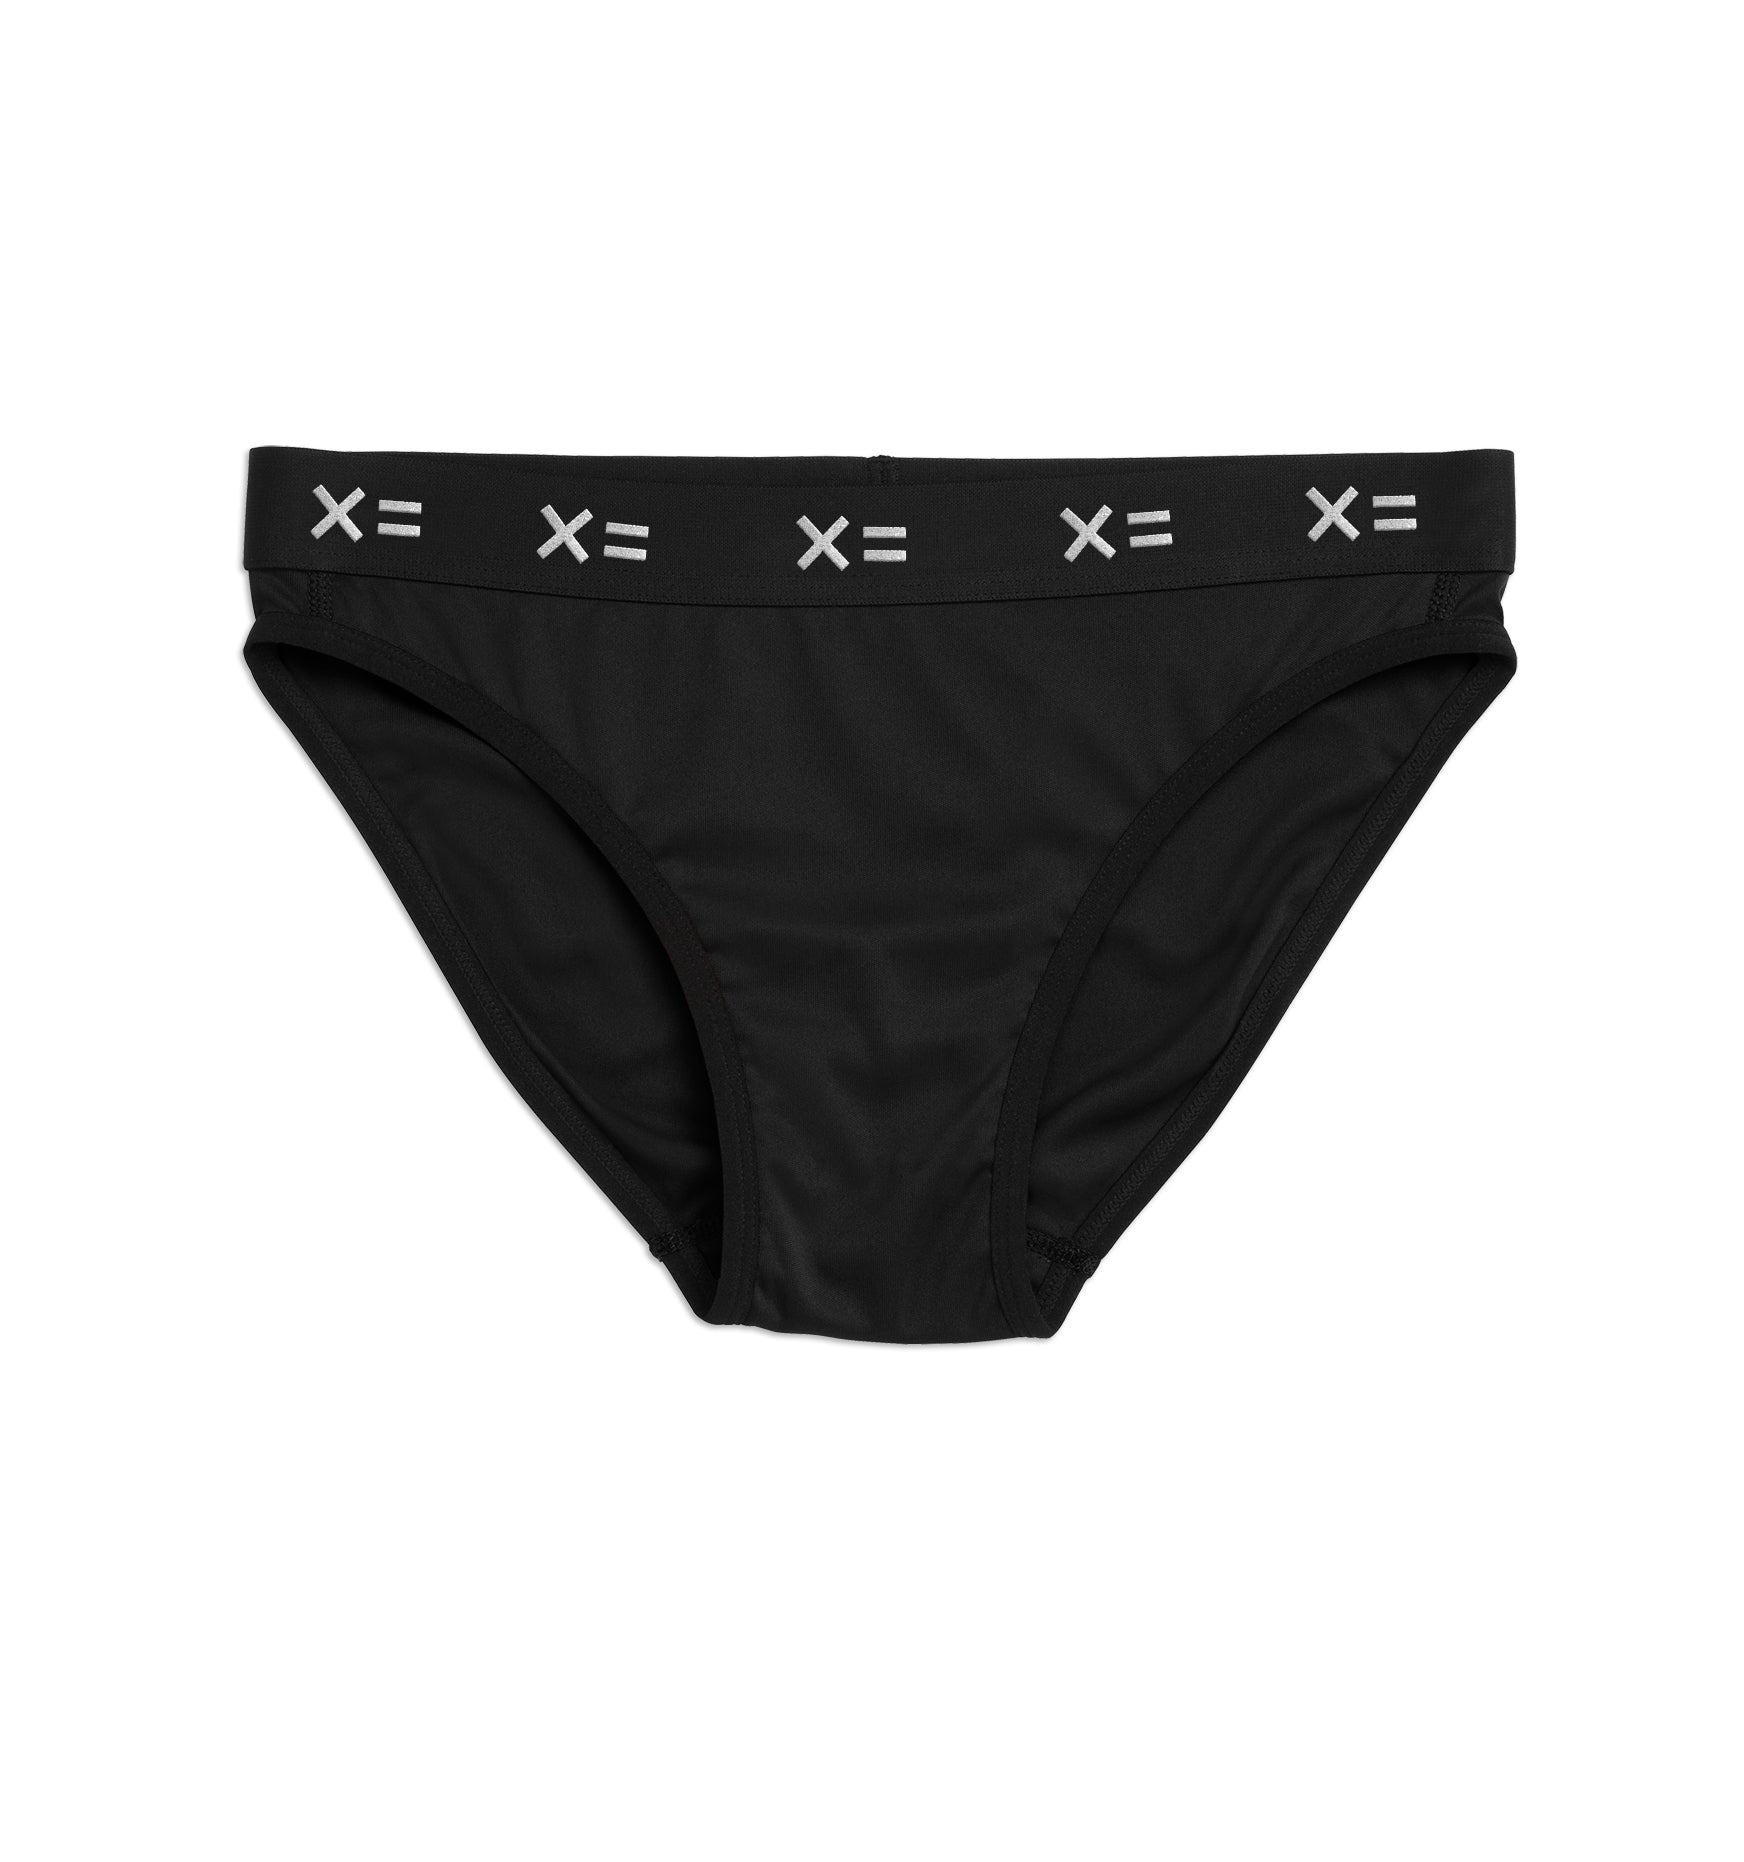 Tucking Bikini - Black X= Shine